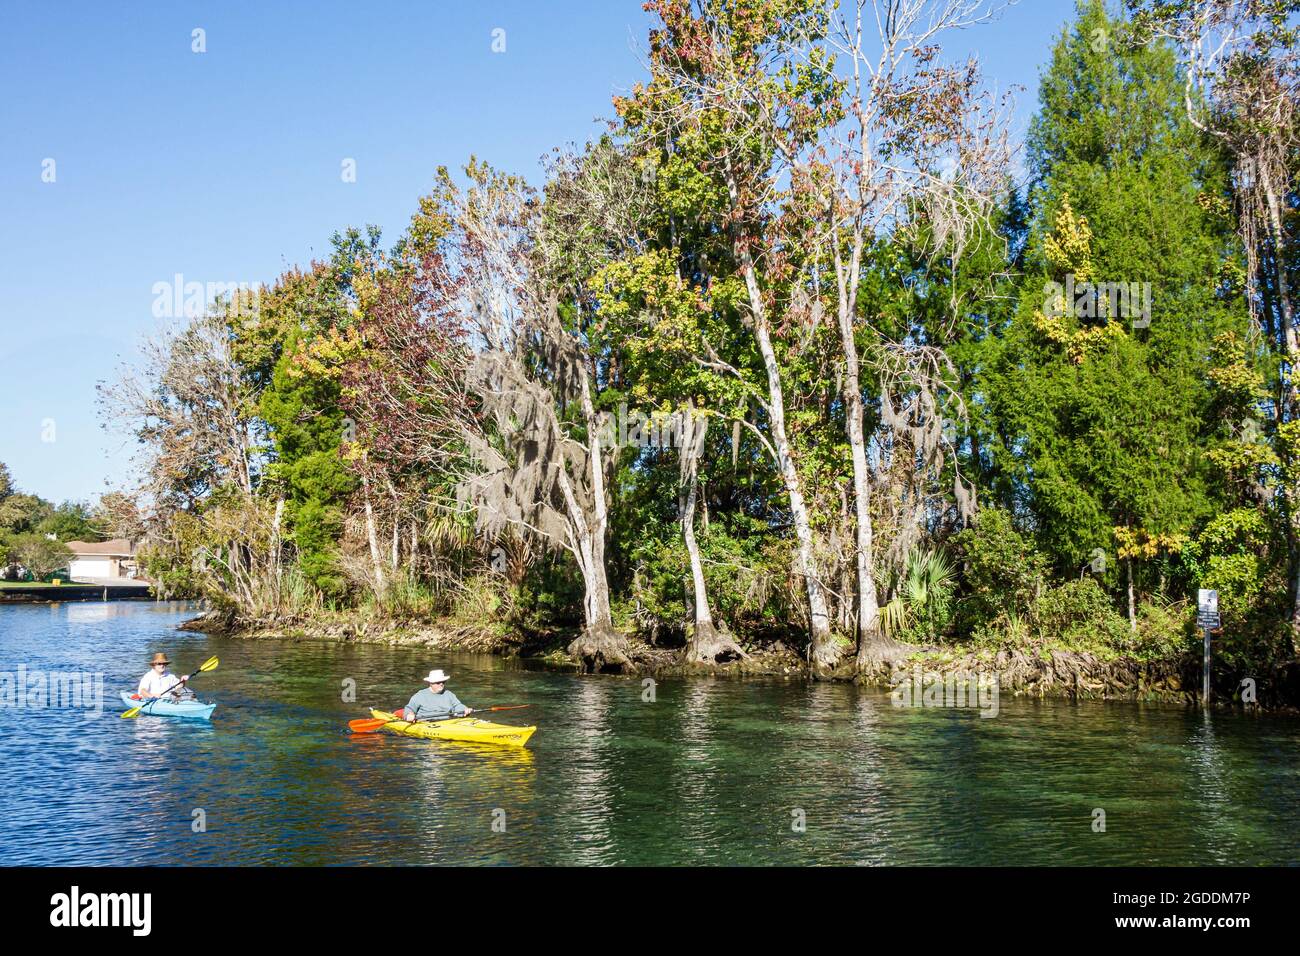 Florida Kings Bay Crystal River National Wildlife Refuge Wasser natürliche Landschaft, Kajak Kajakfahrer Senioren Bürger Mann Männer männlich Stockfoto